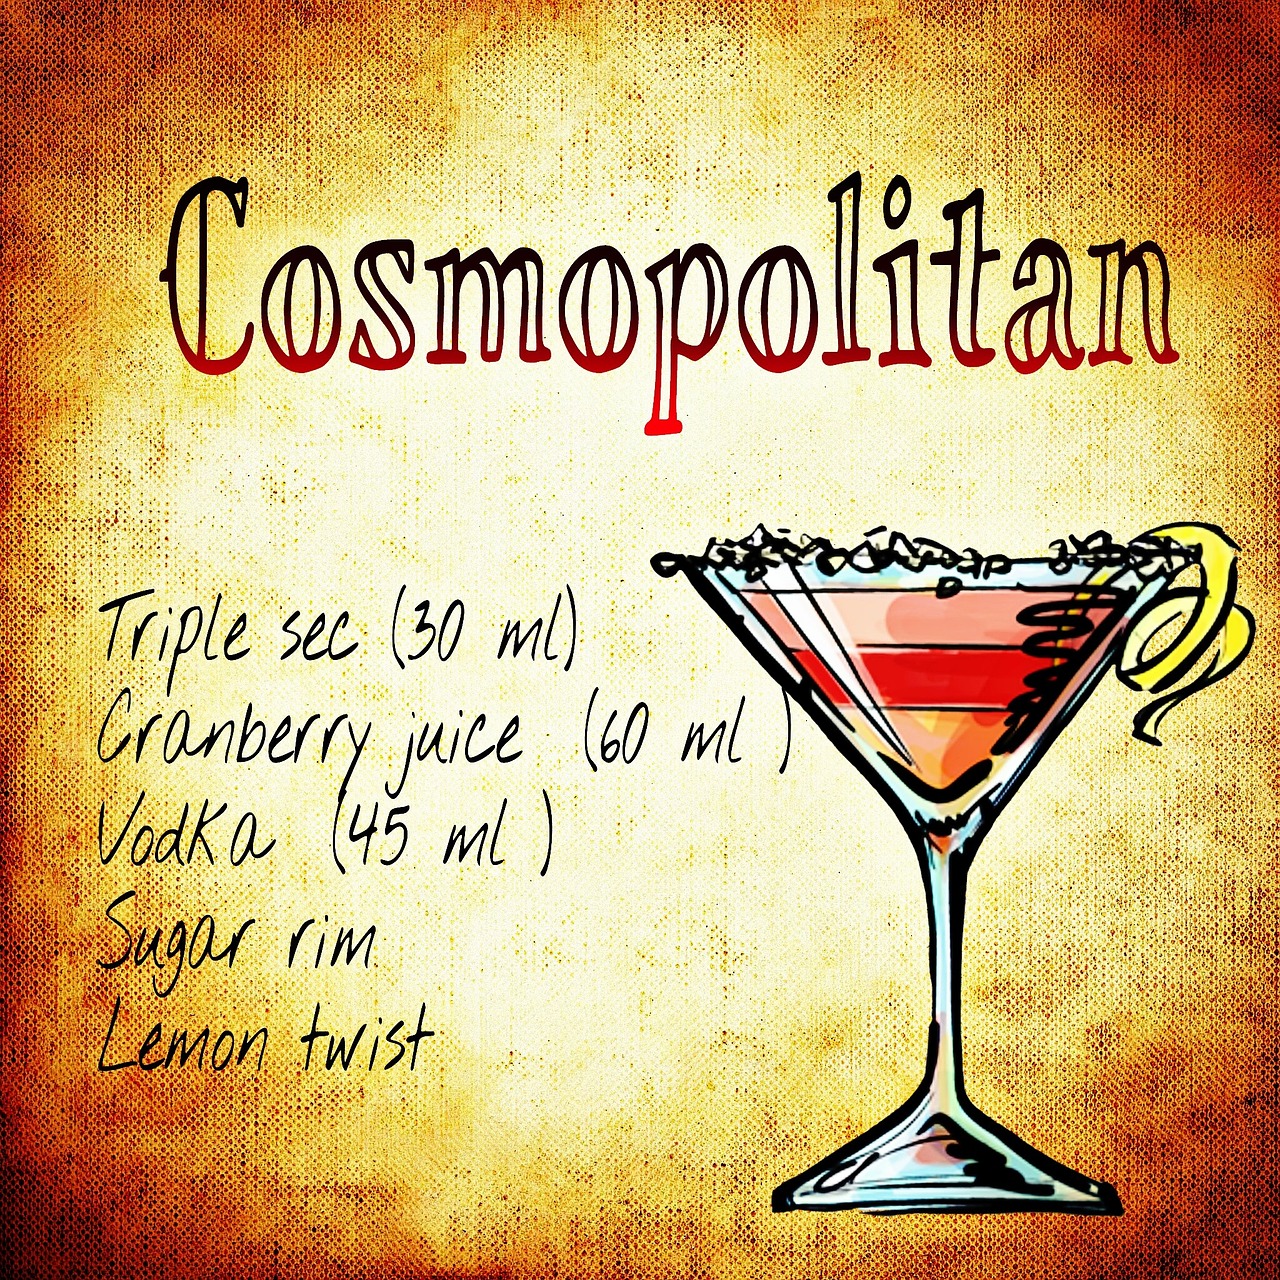 cosmopolitan cocktail drink free photo